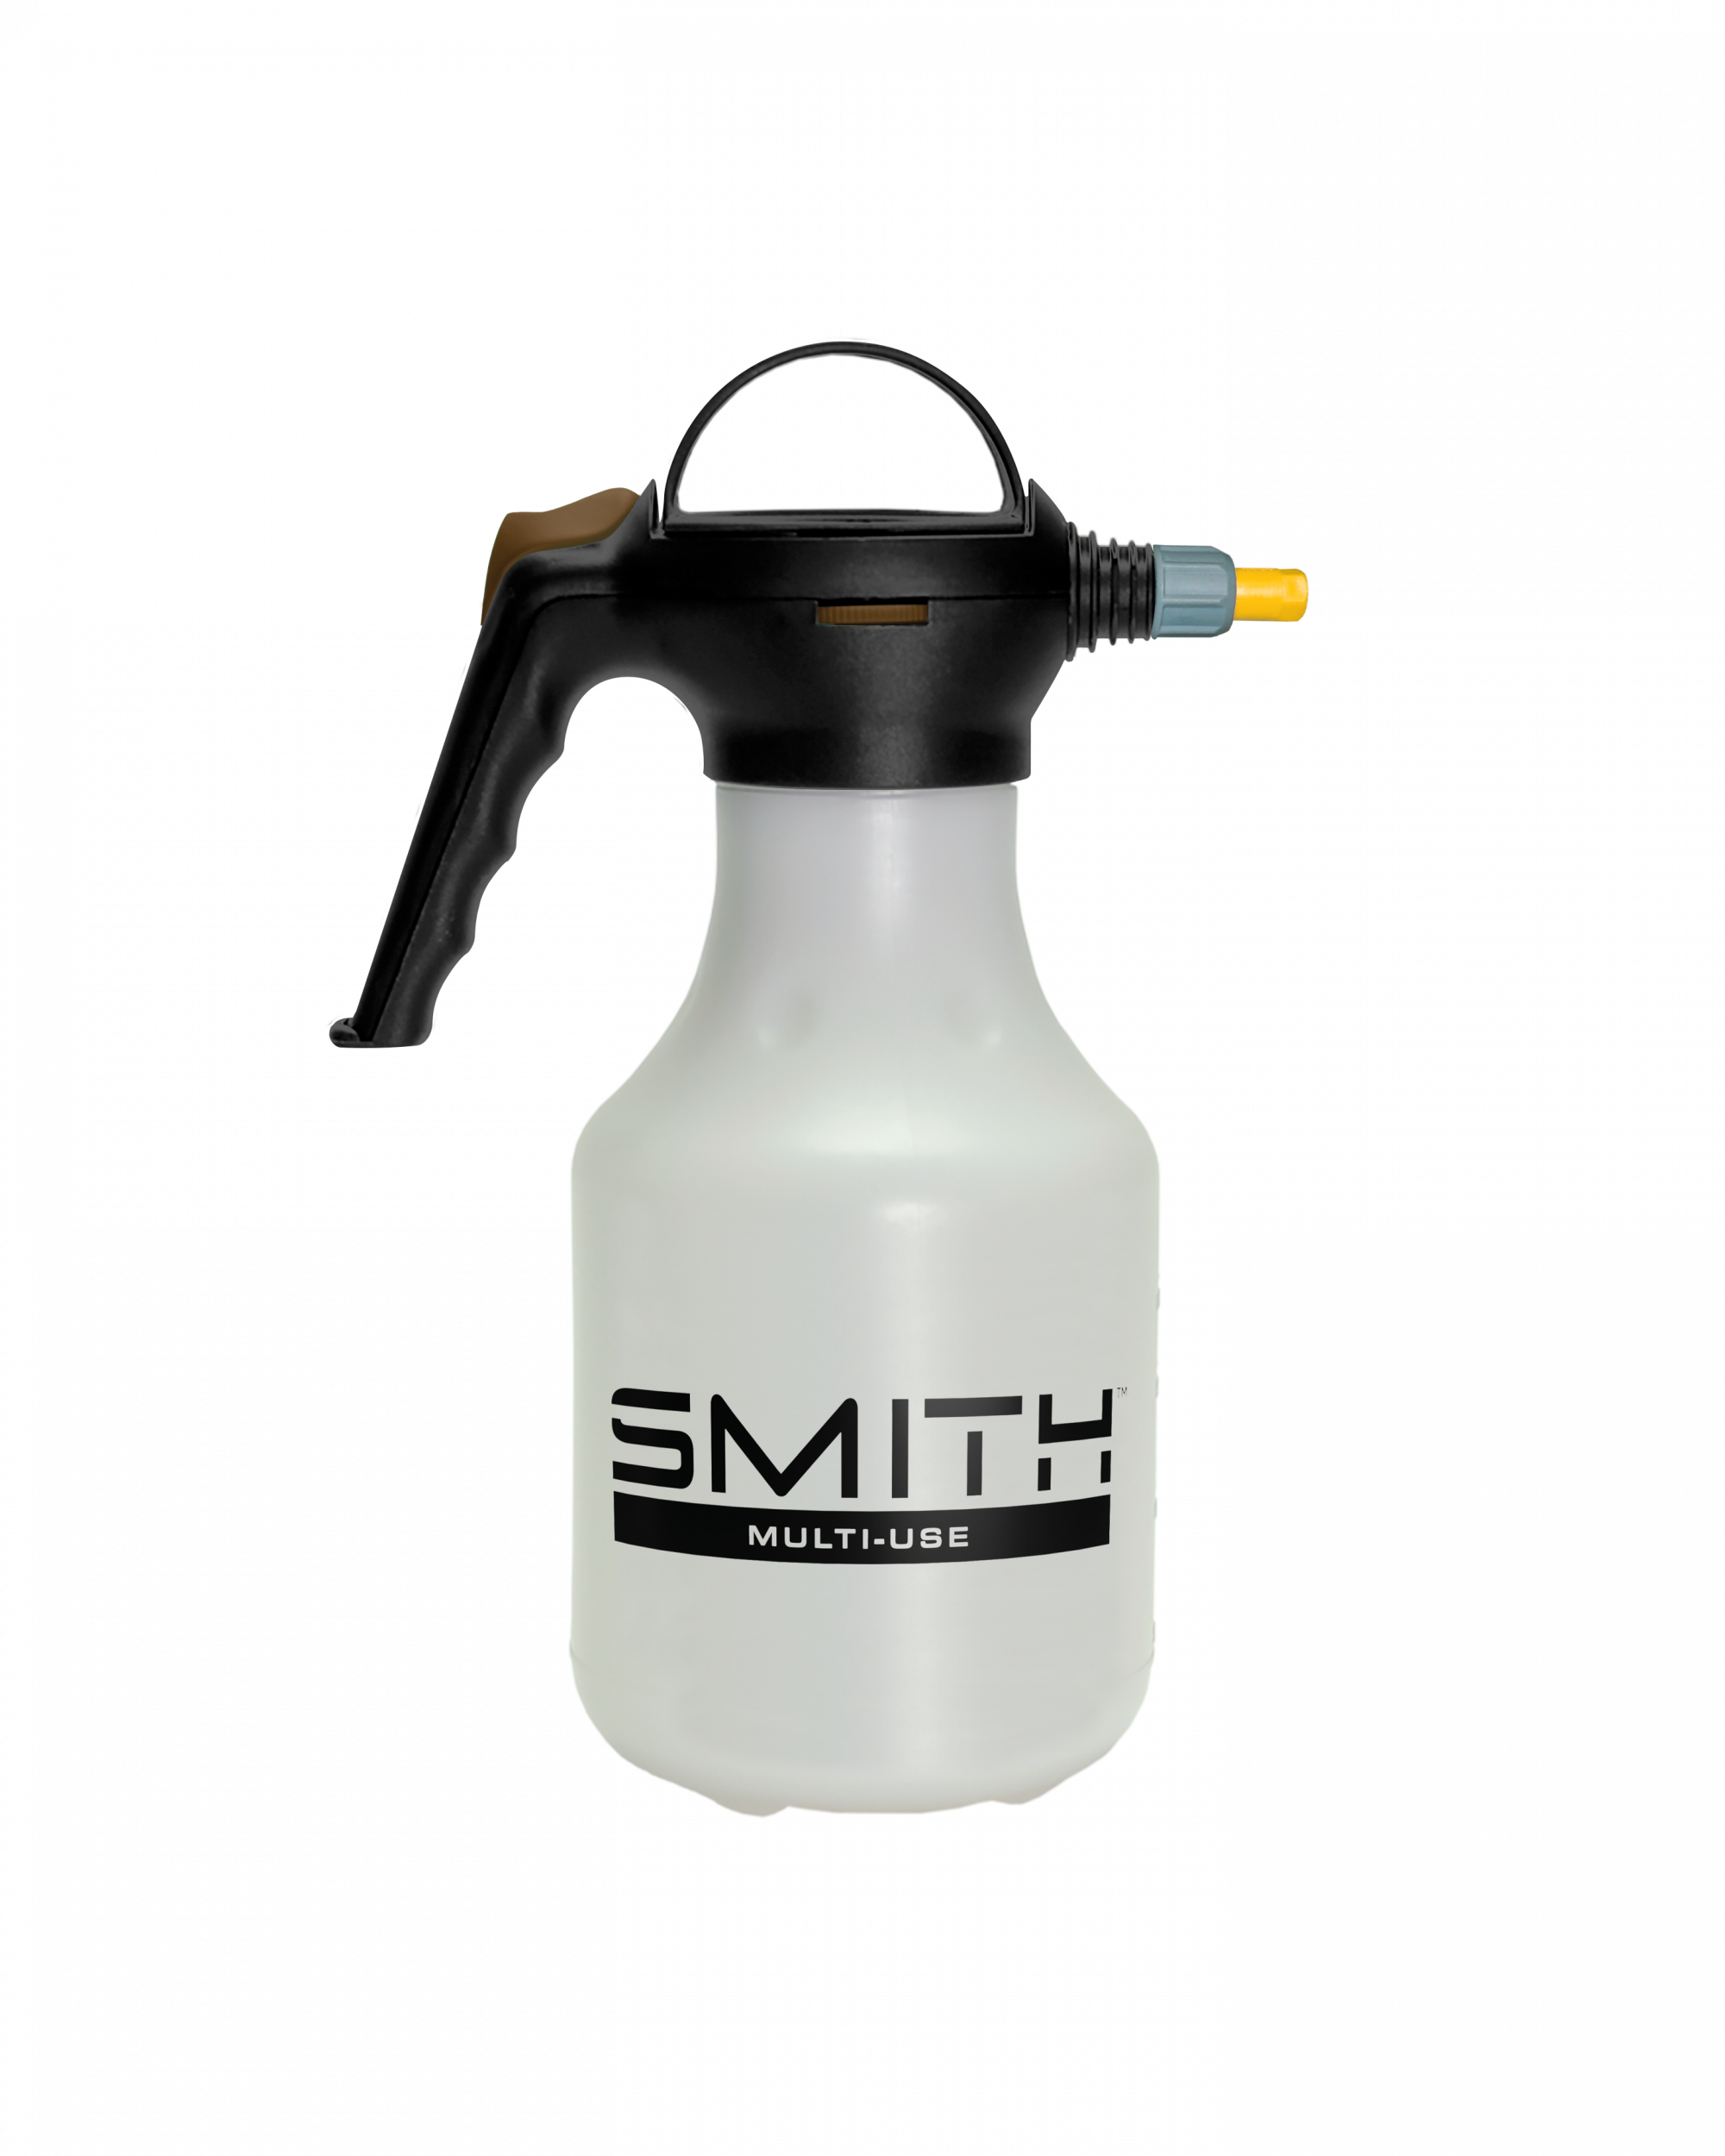 Smith Multi-Use 48 oz. Sprayer